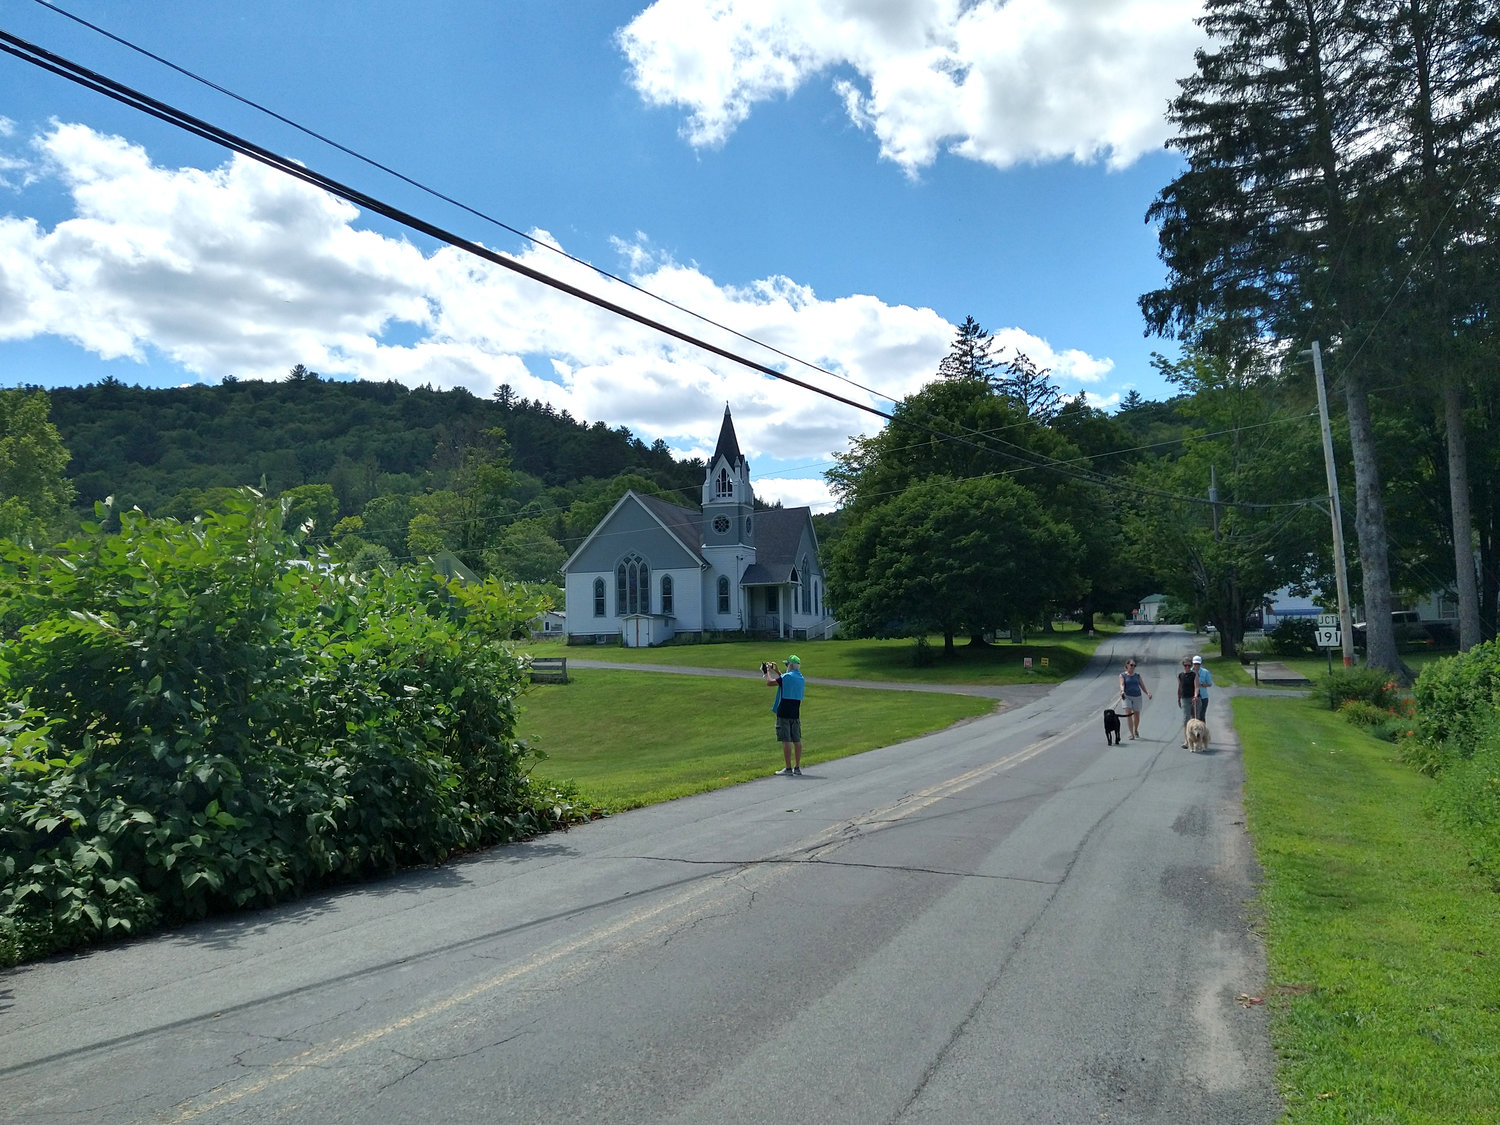 Taking a walk near the Equinunk United Methodist Church.